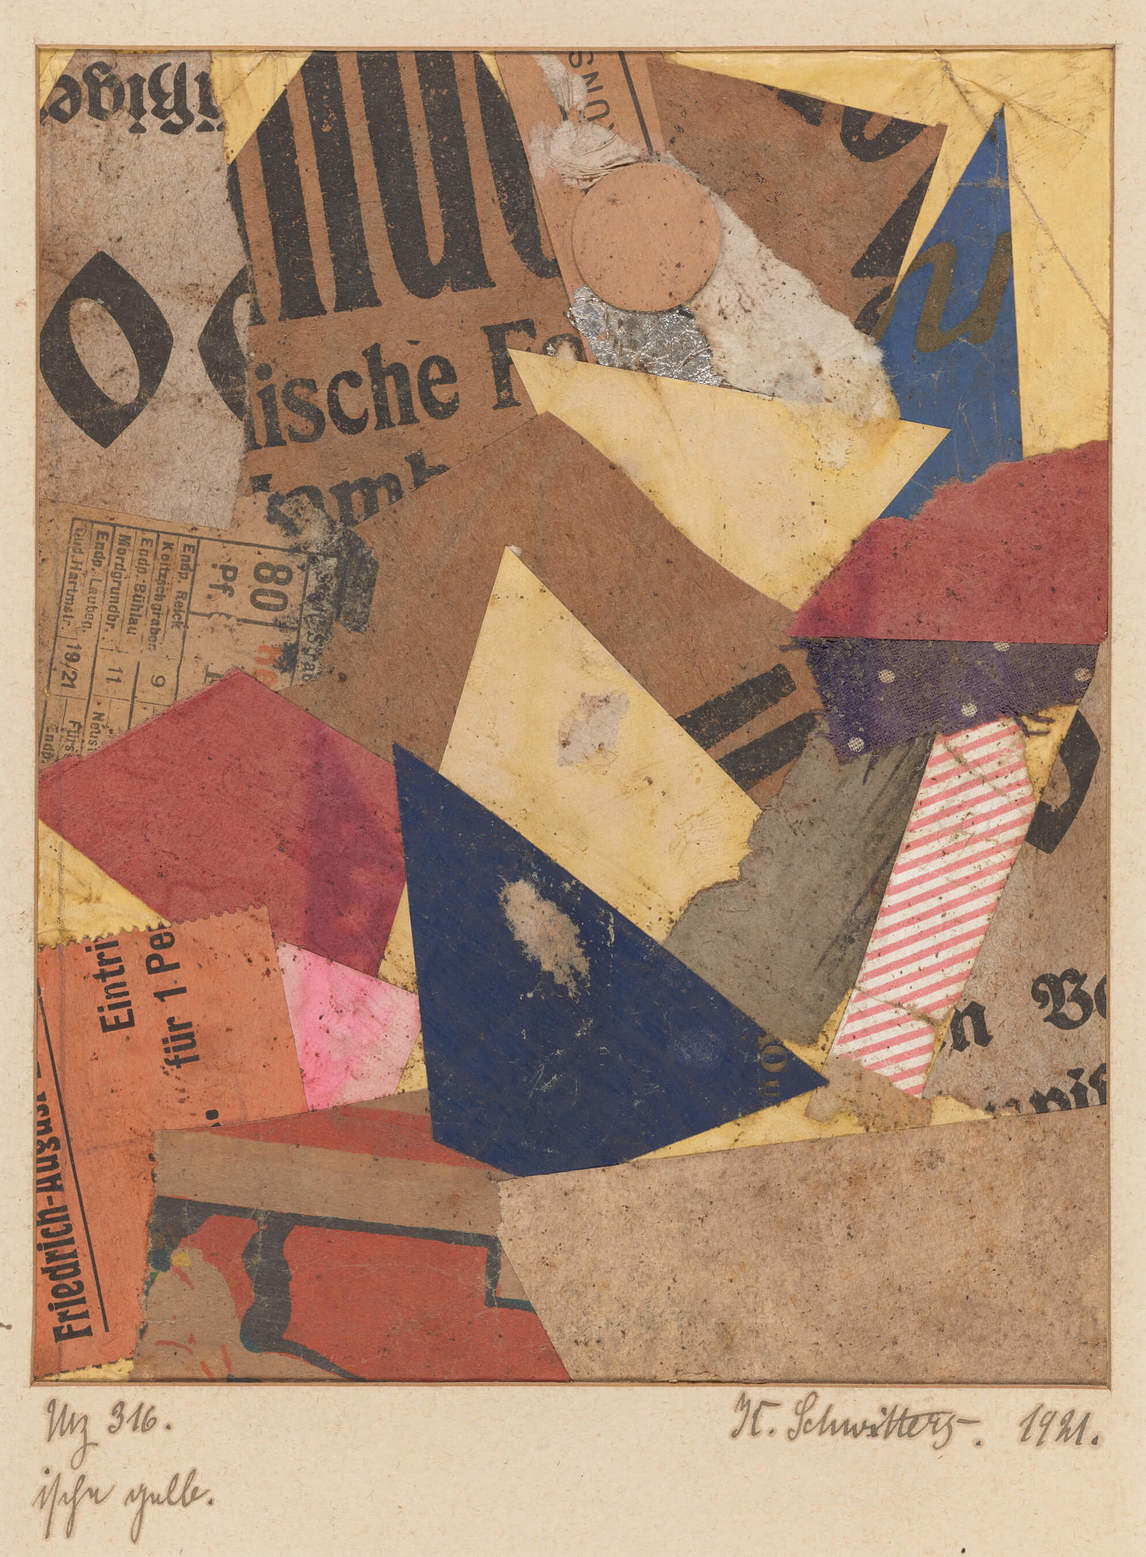 Art Canada Institute, Greg Curnoe, Kurt Schwitters, Mz 316 ische gelb (Jaune Mz 316), 1921.